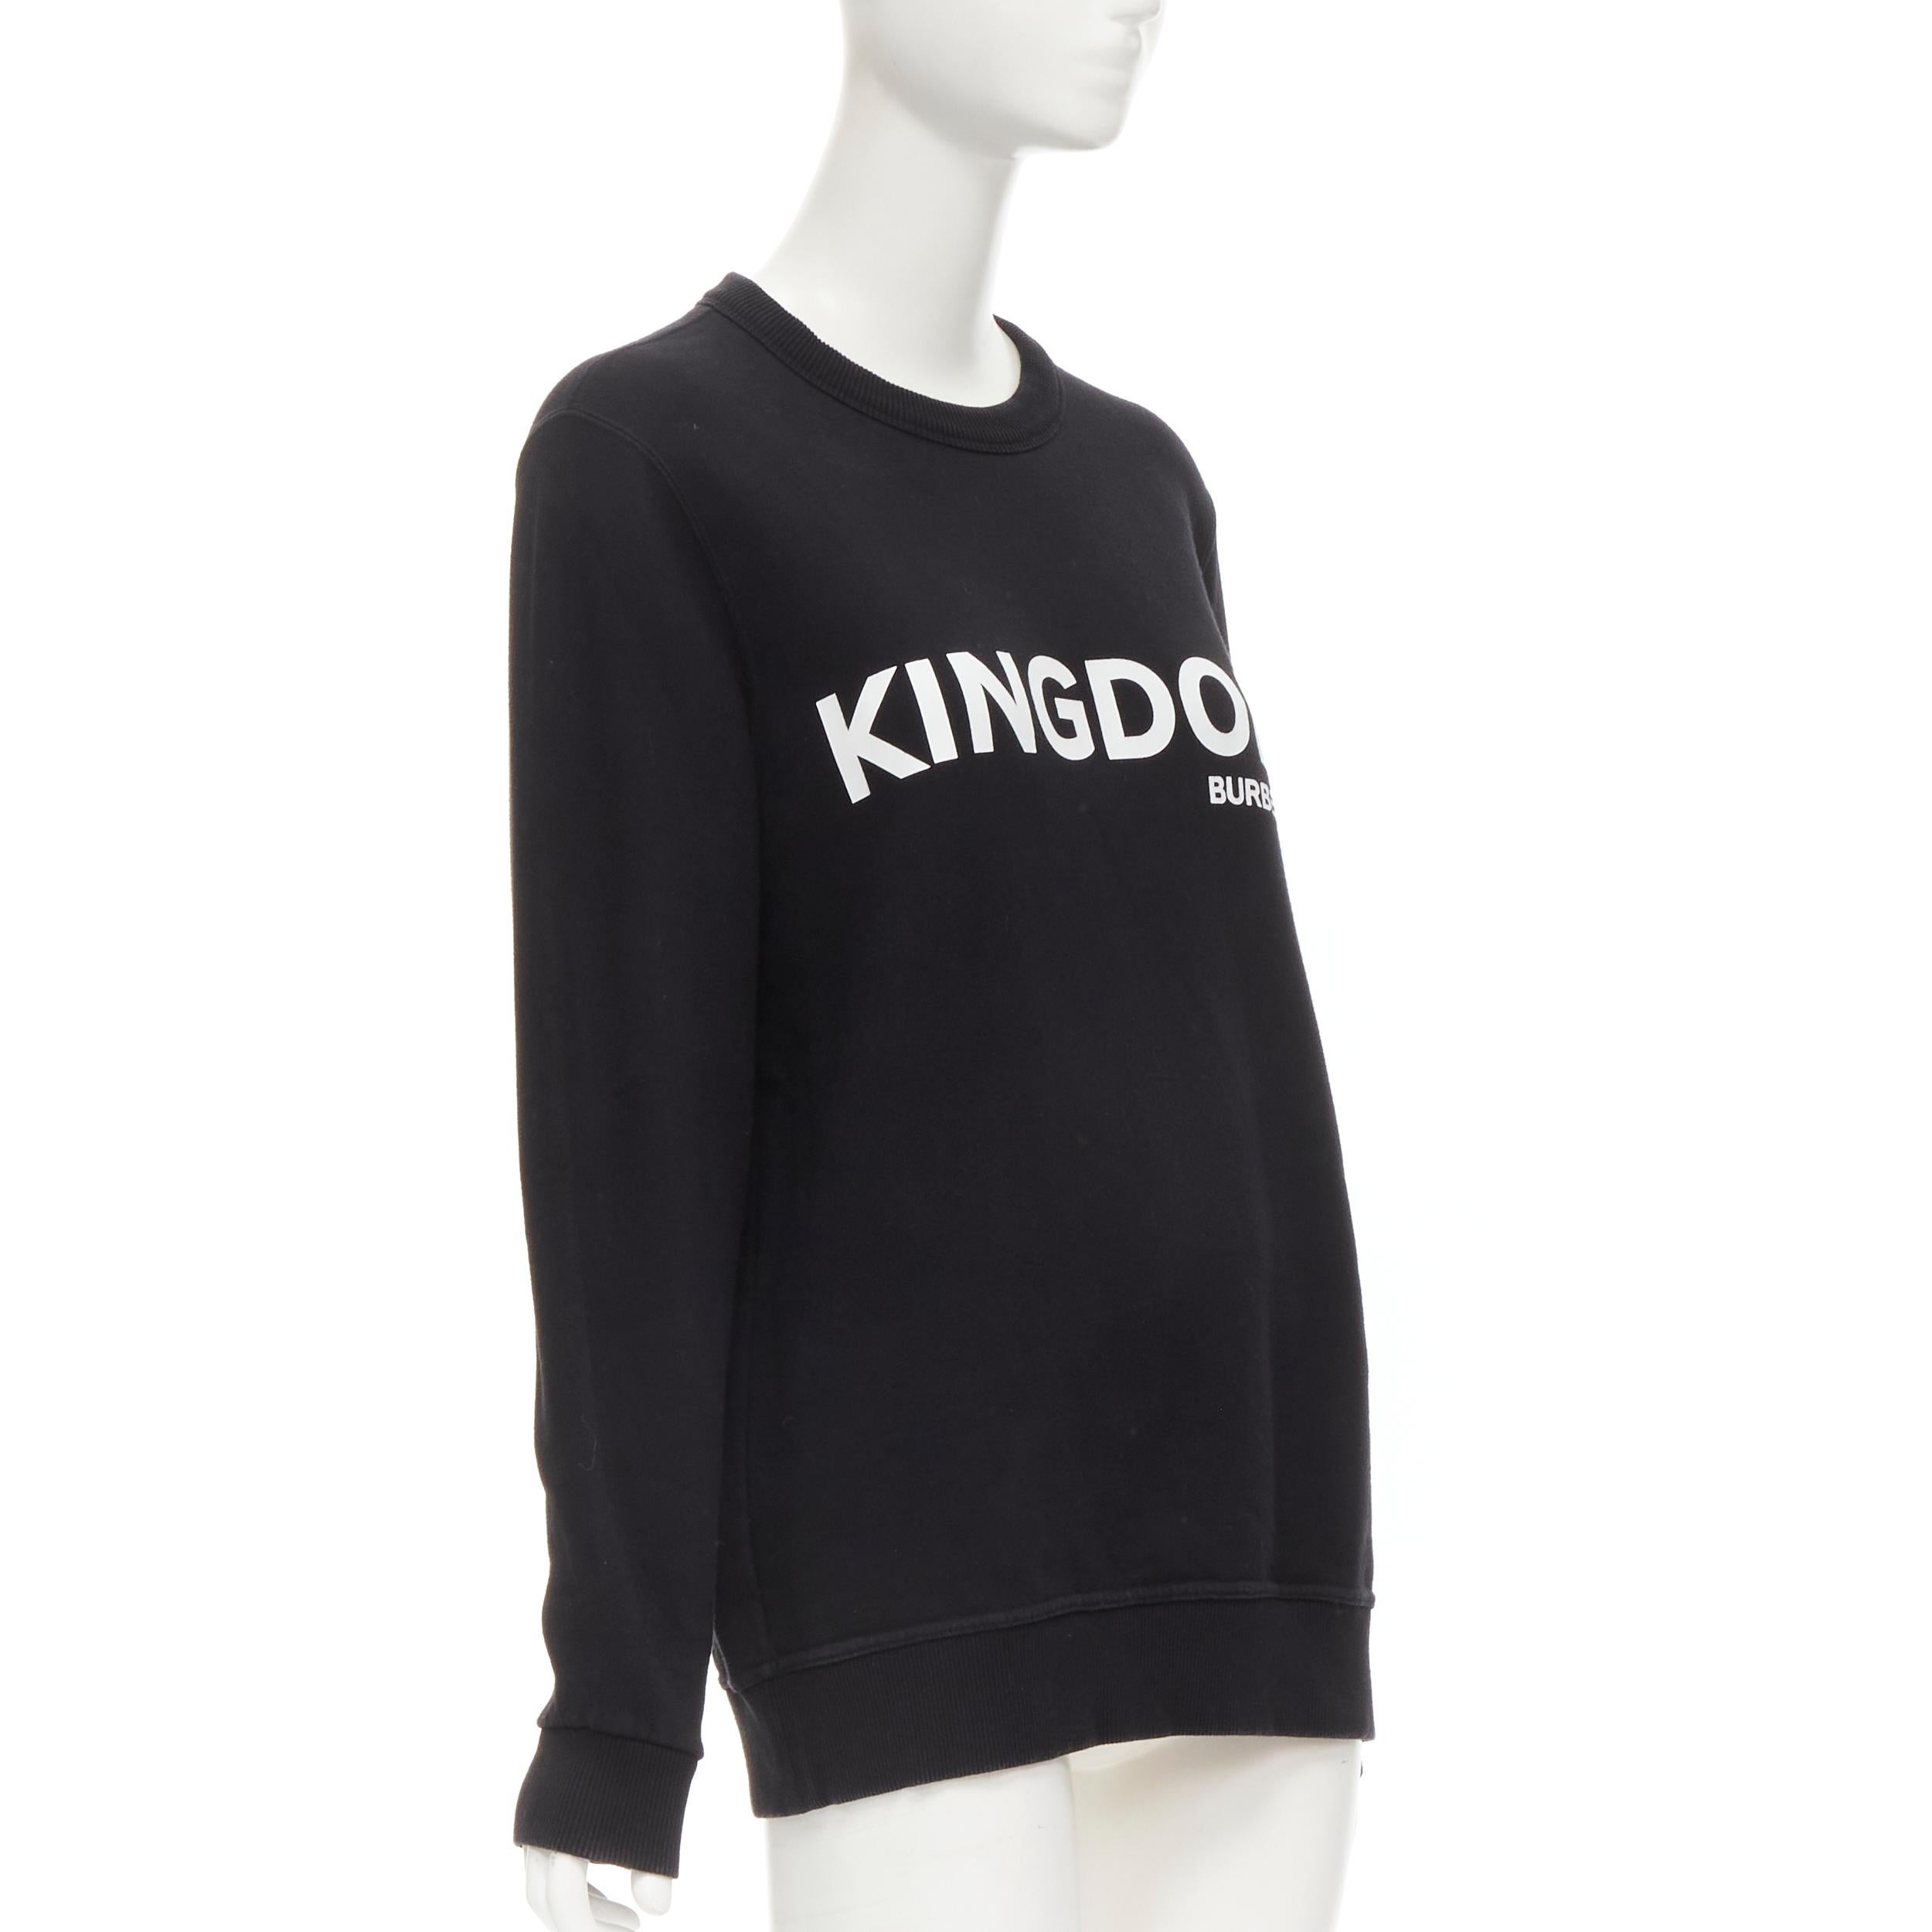 Noir Burberry Tisci KINGDOM logo print black cotton crewneck pullover sweater M en vente